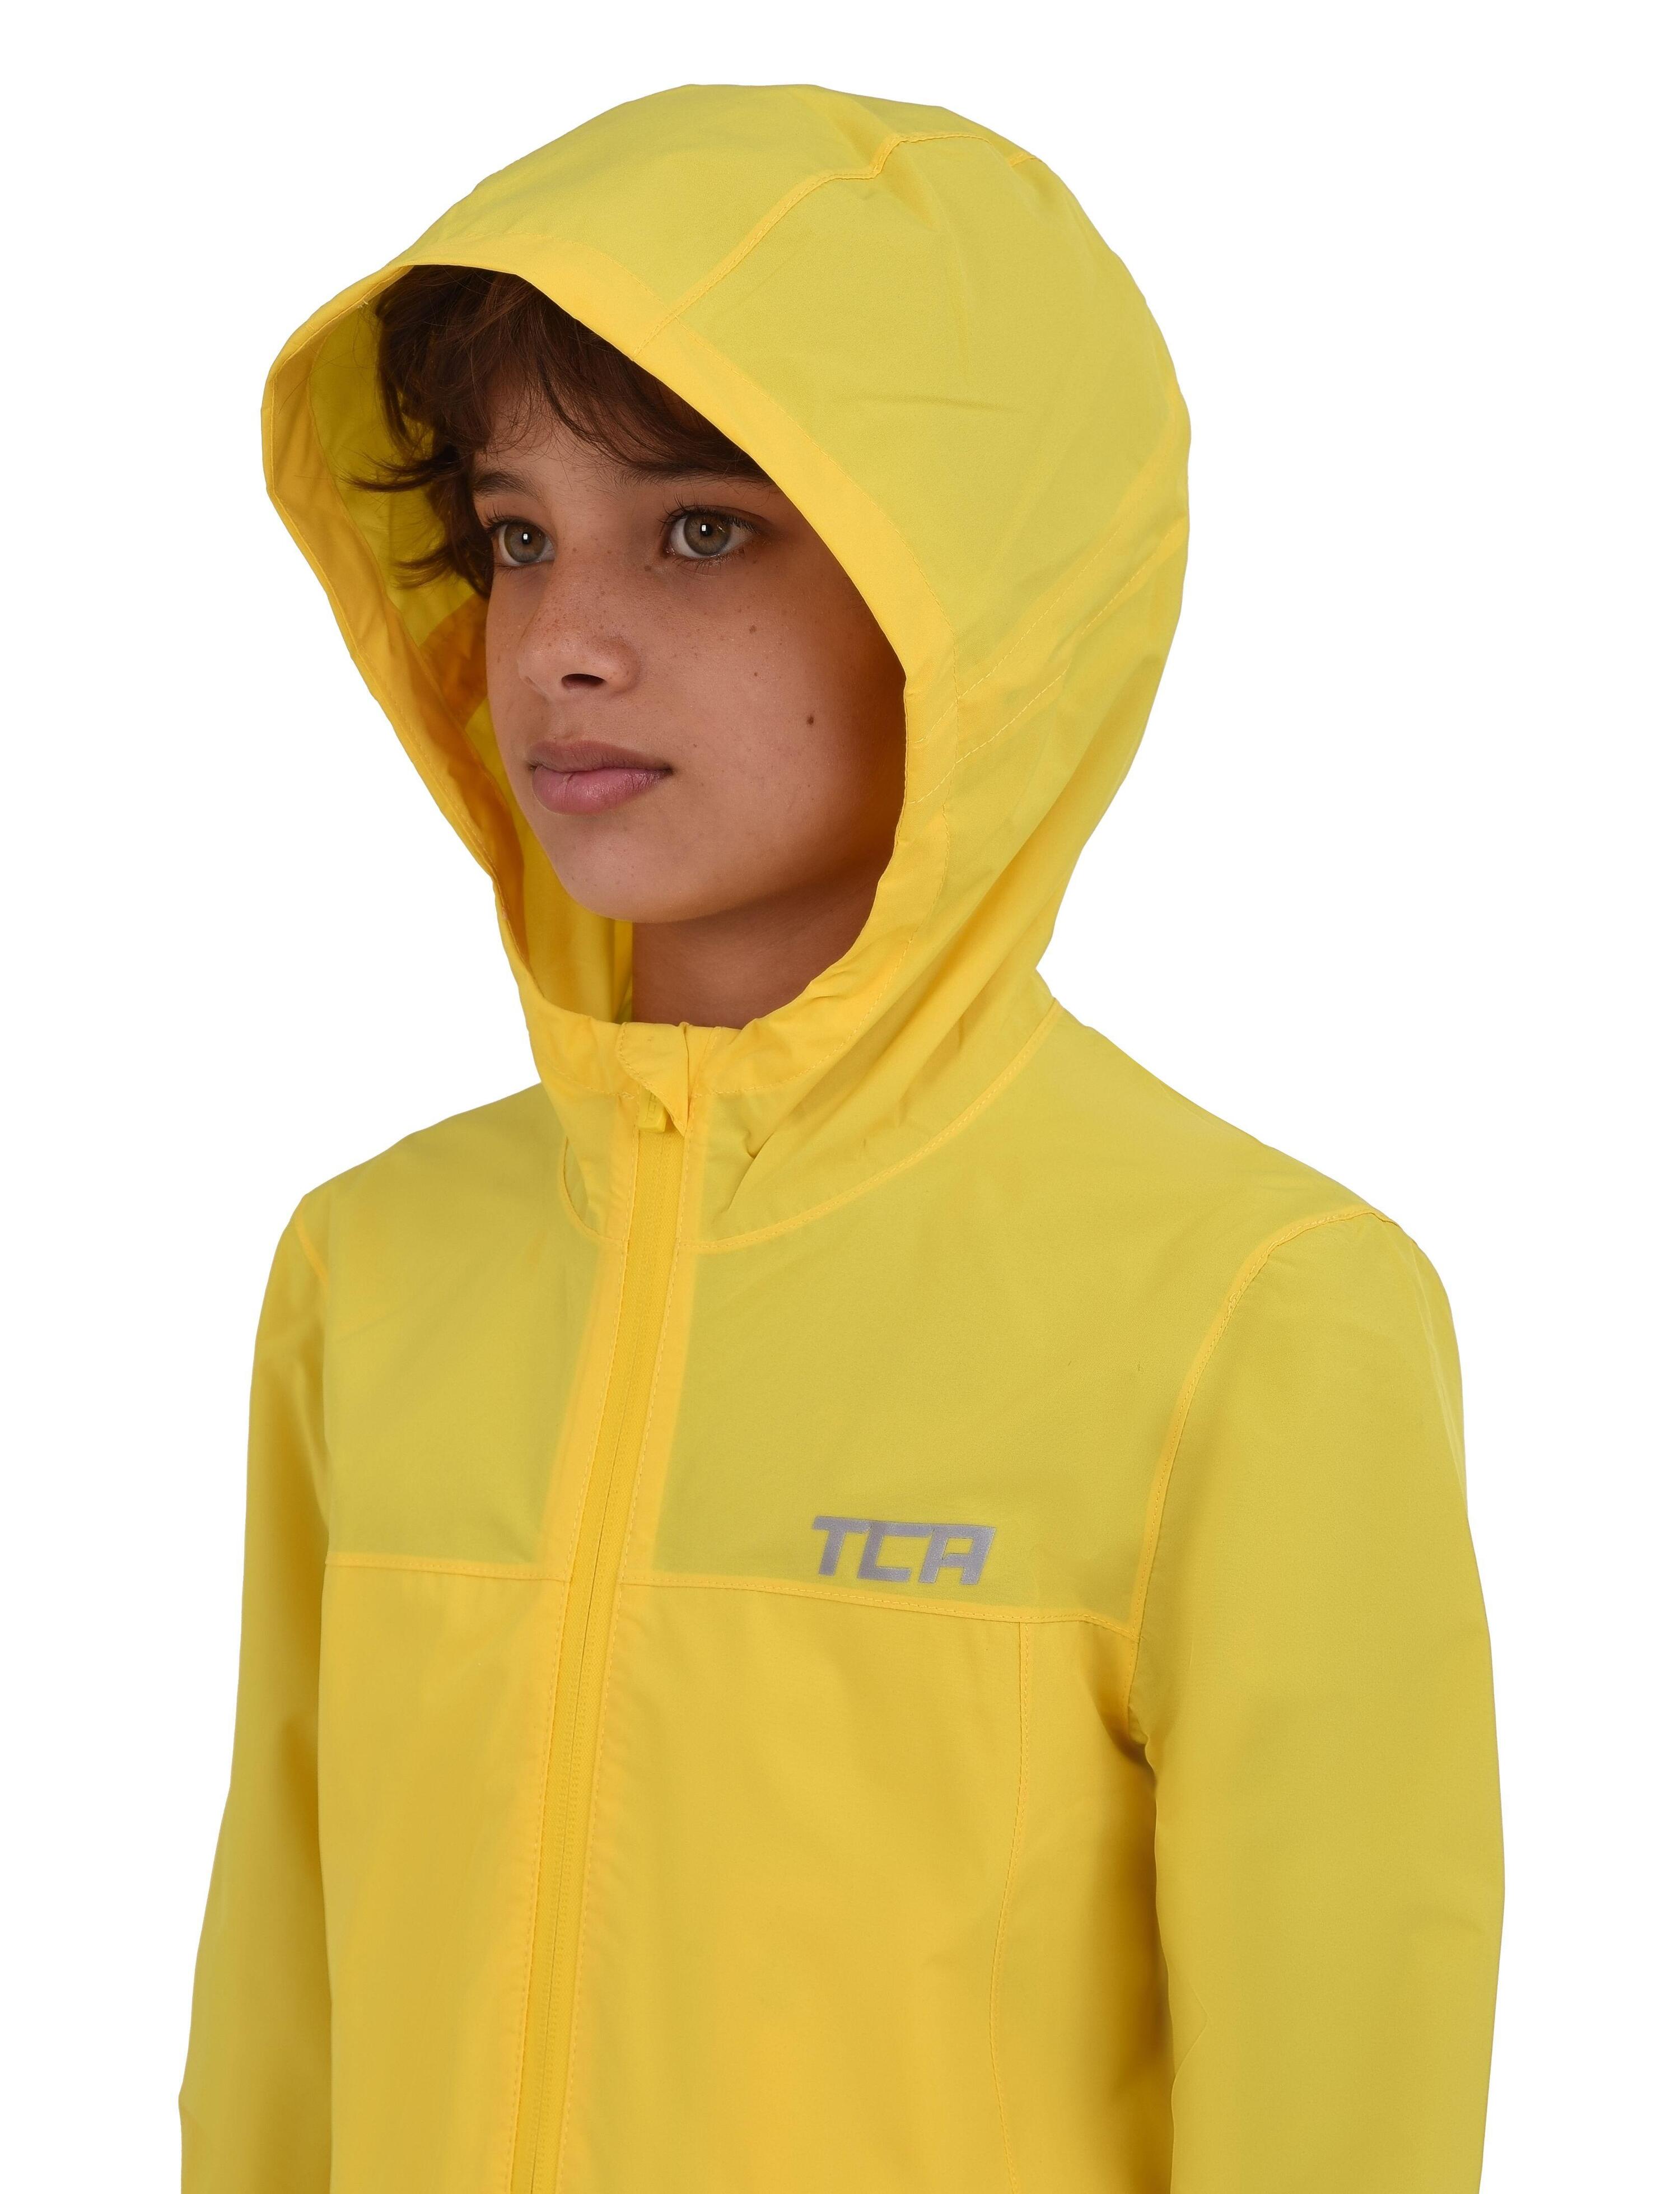 Boys' AirLite Rain Jacket with Zip Pockets - Vibrant Yellow 4/5